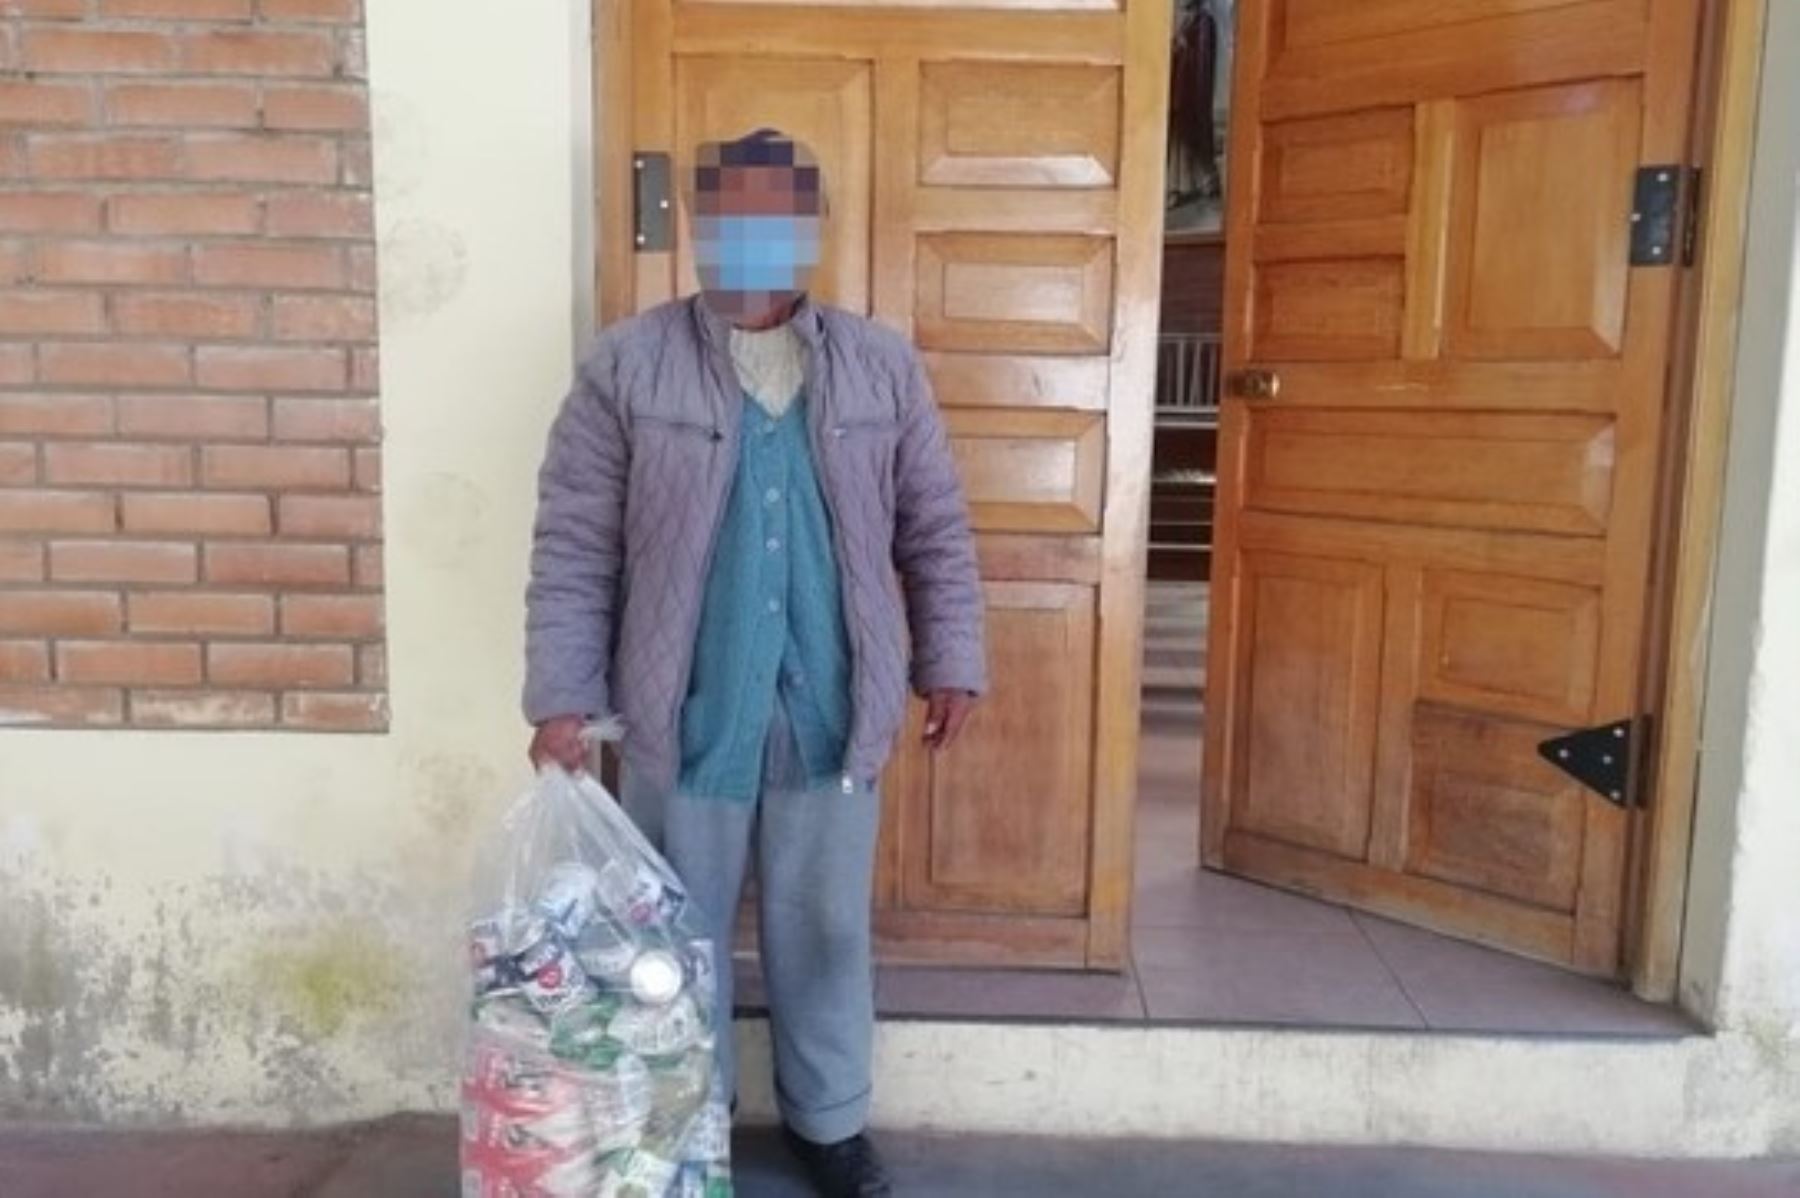 Inerno del penal de Huancavelica recibe canasta de alimentos del grupo "Te Cuido Perú".